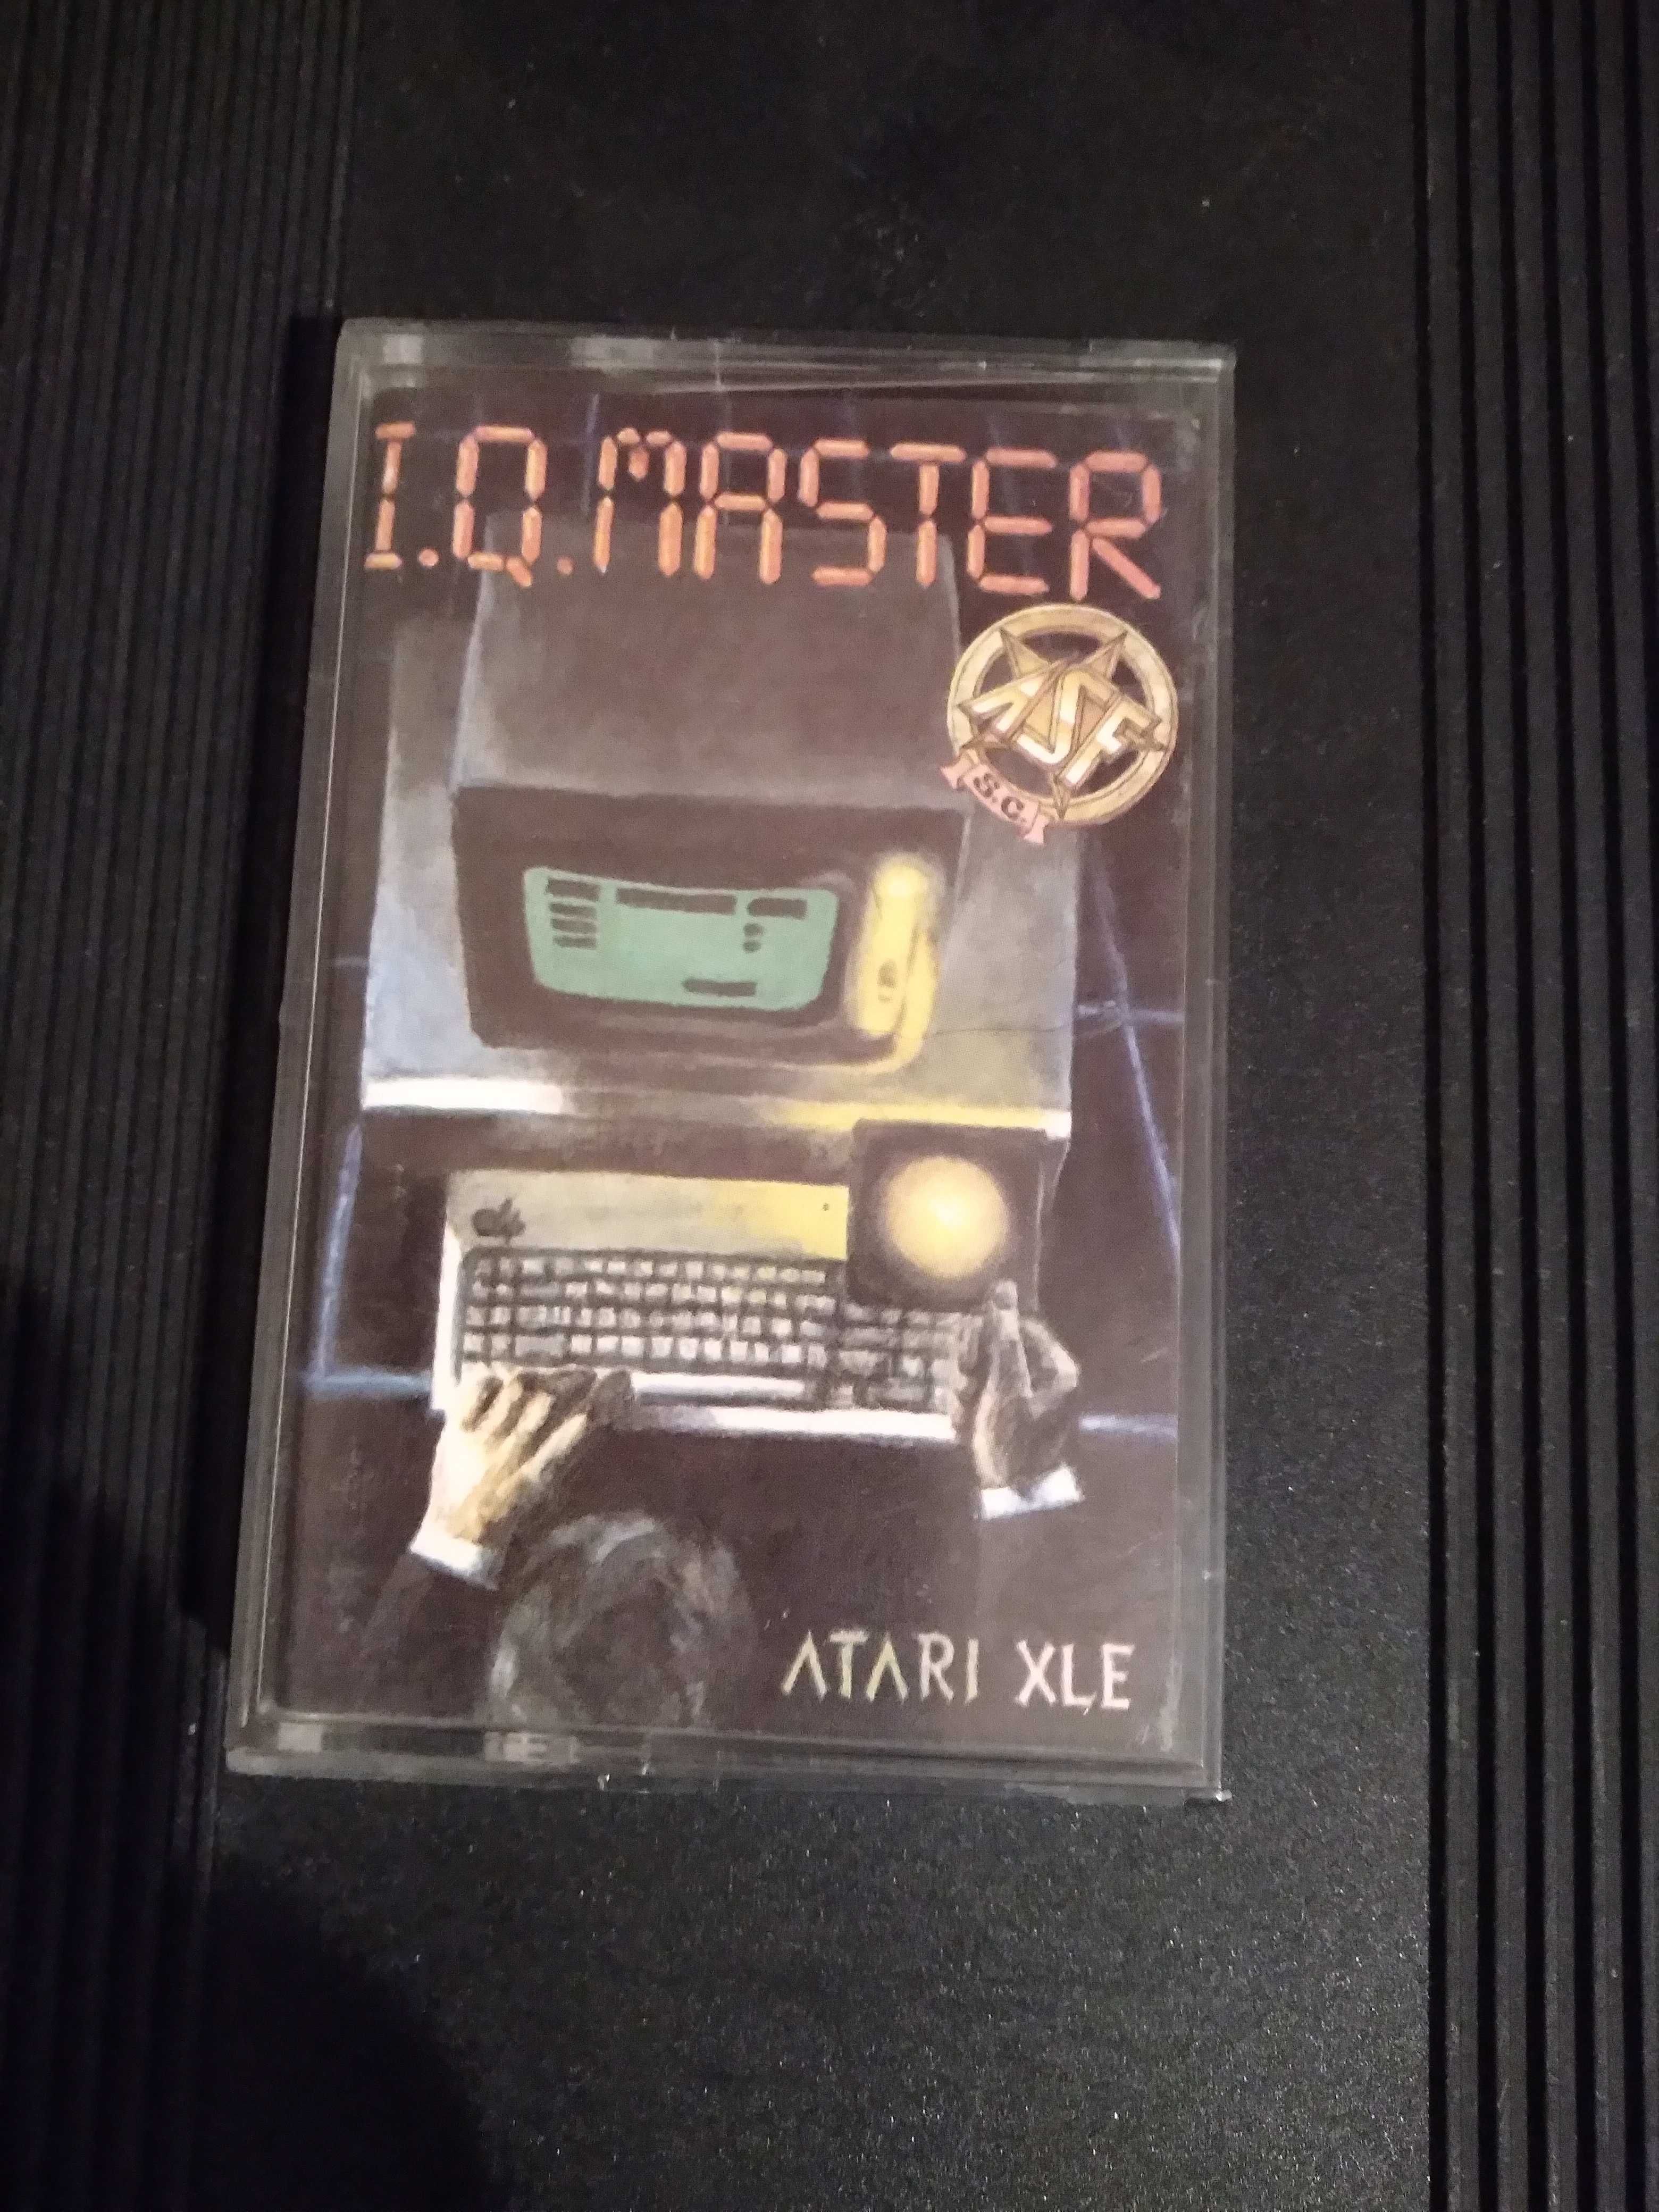 Atari Bardzo rzadka I.Q.MASTER xe xl Oryginalna 100% sprawna testowana